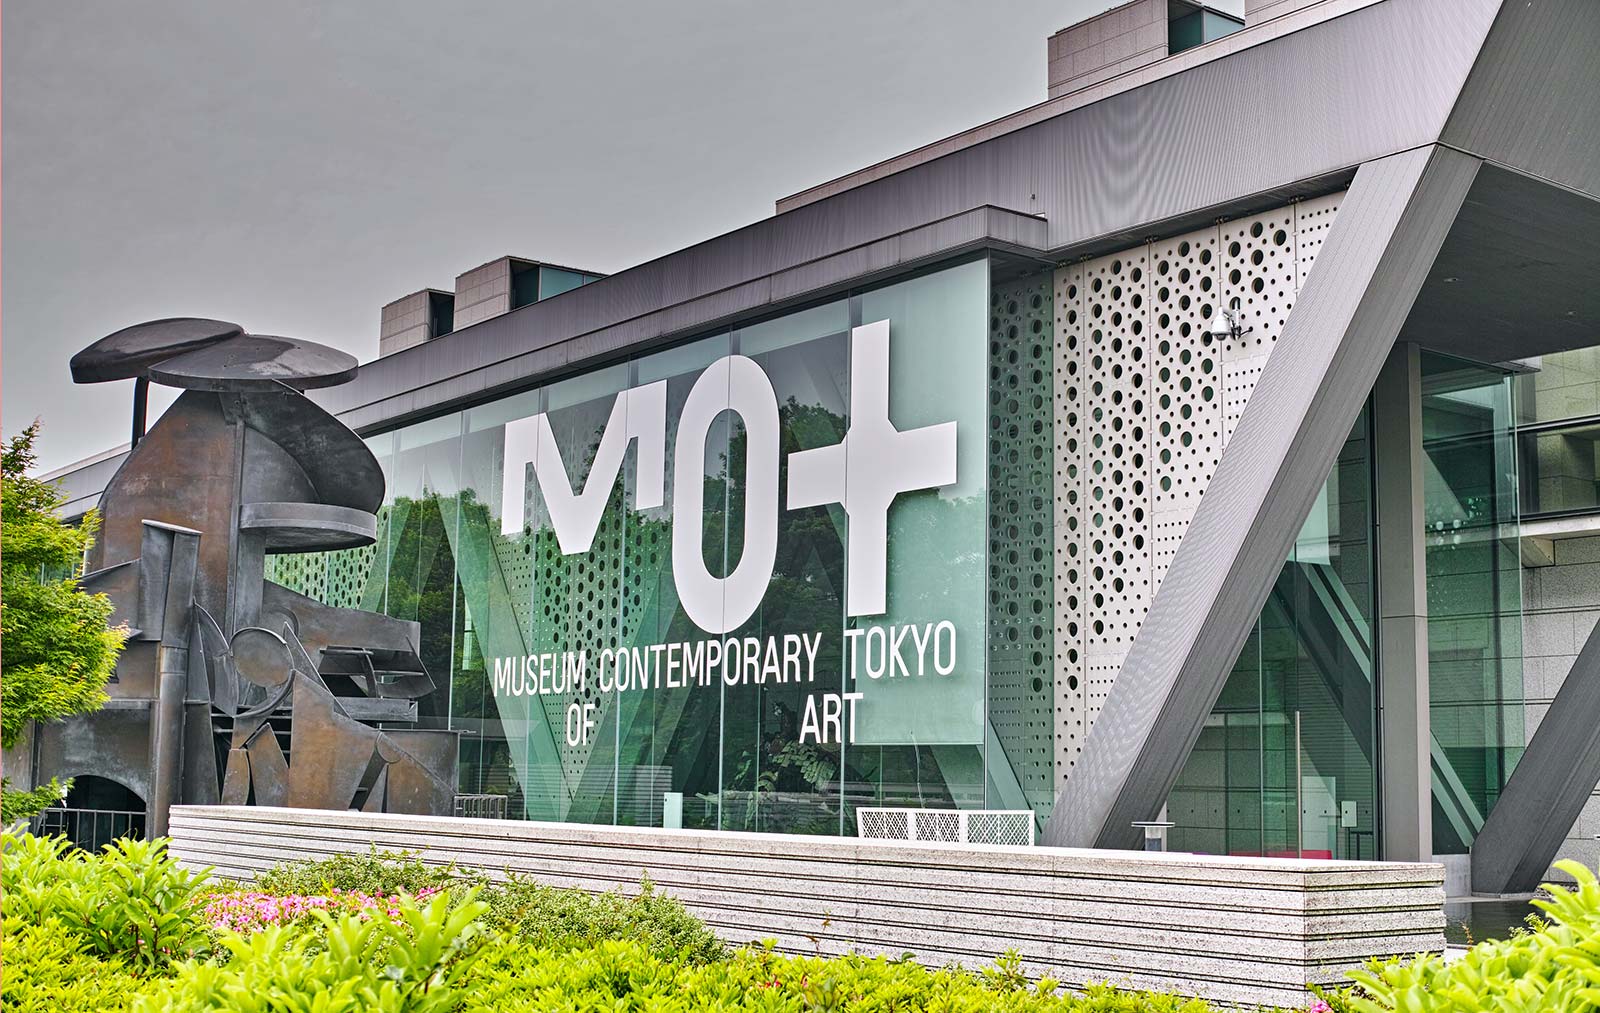 Kiyosumi Shirakawa Koto Museum of Contemporary Art Tokyo